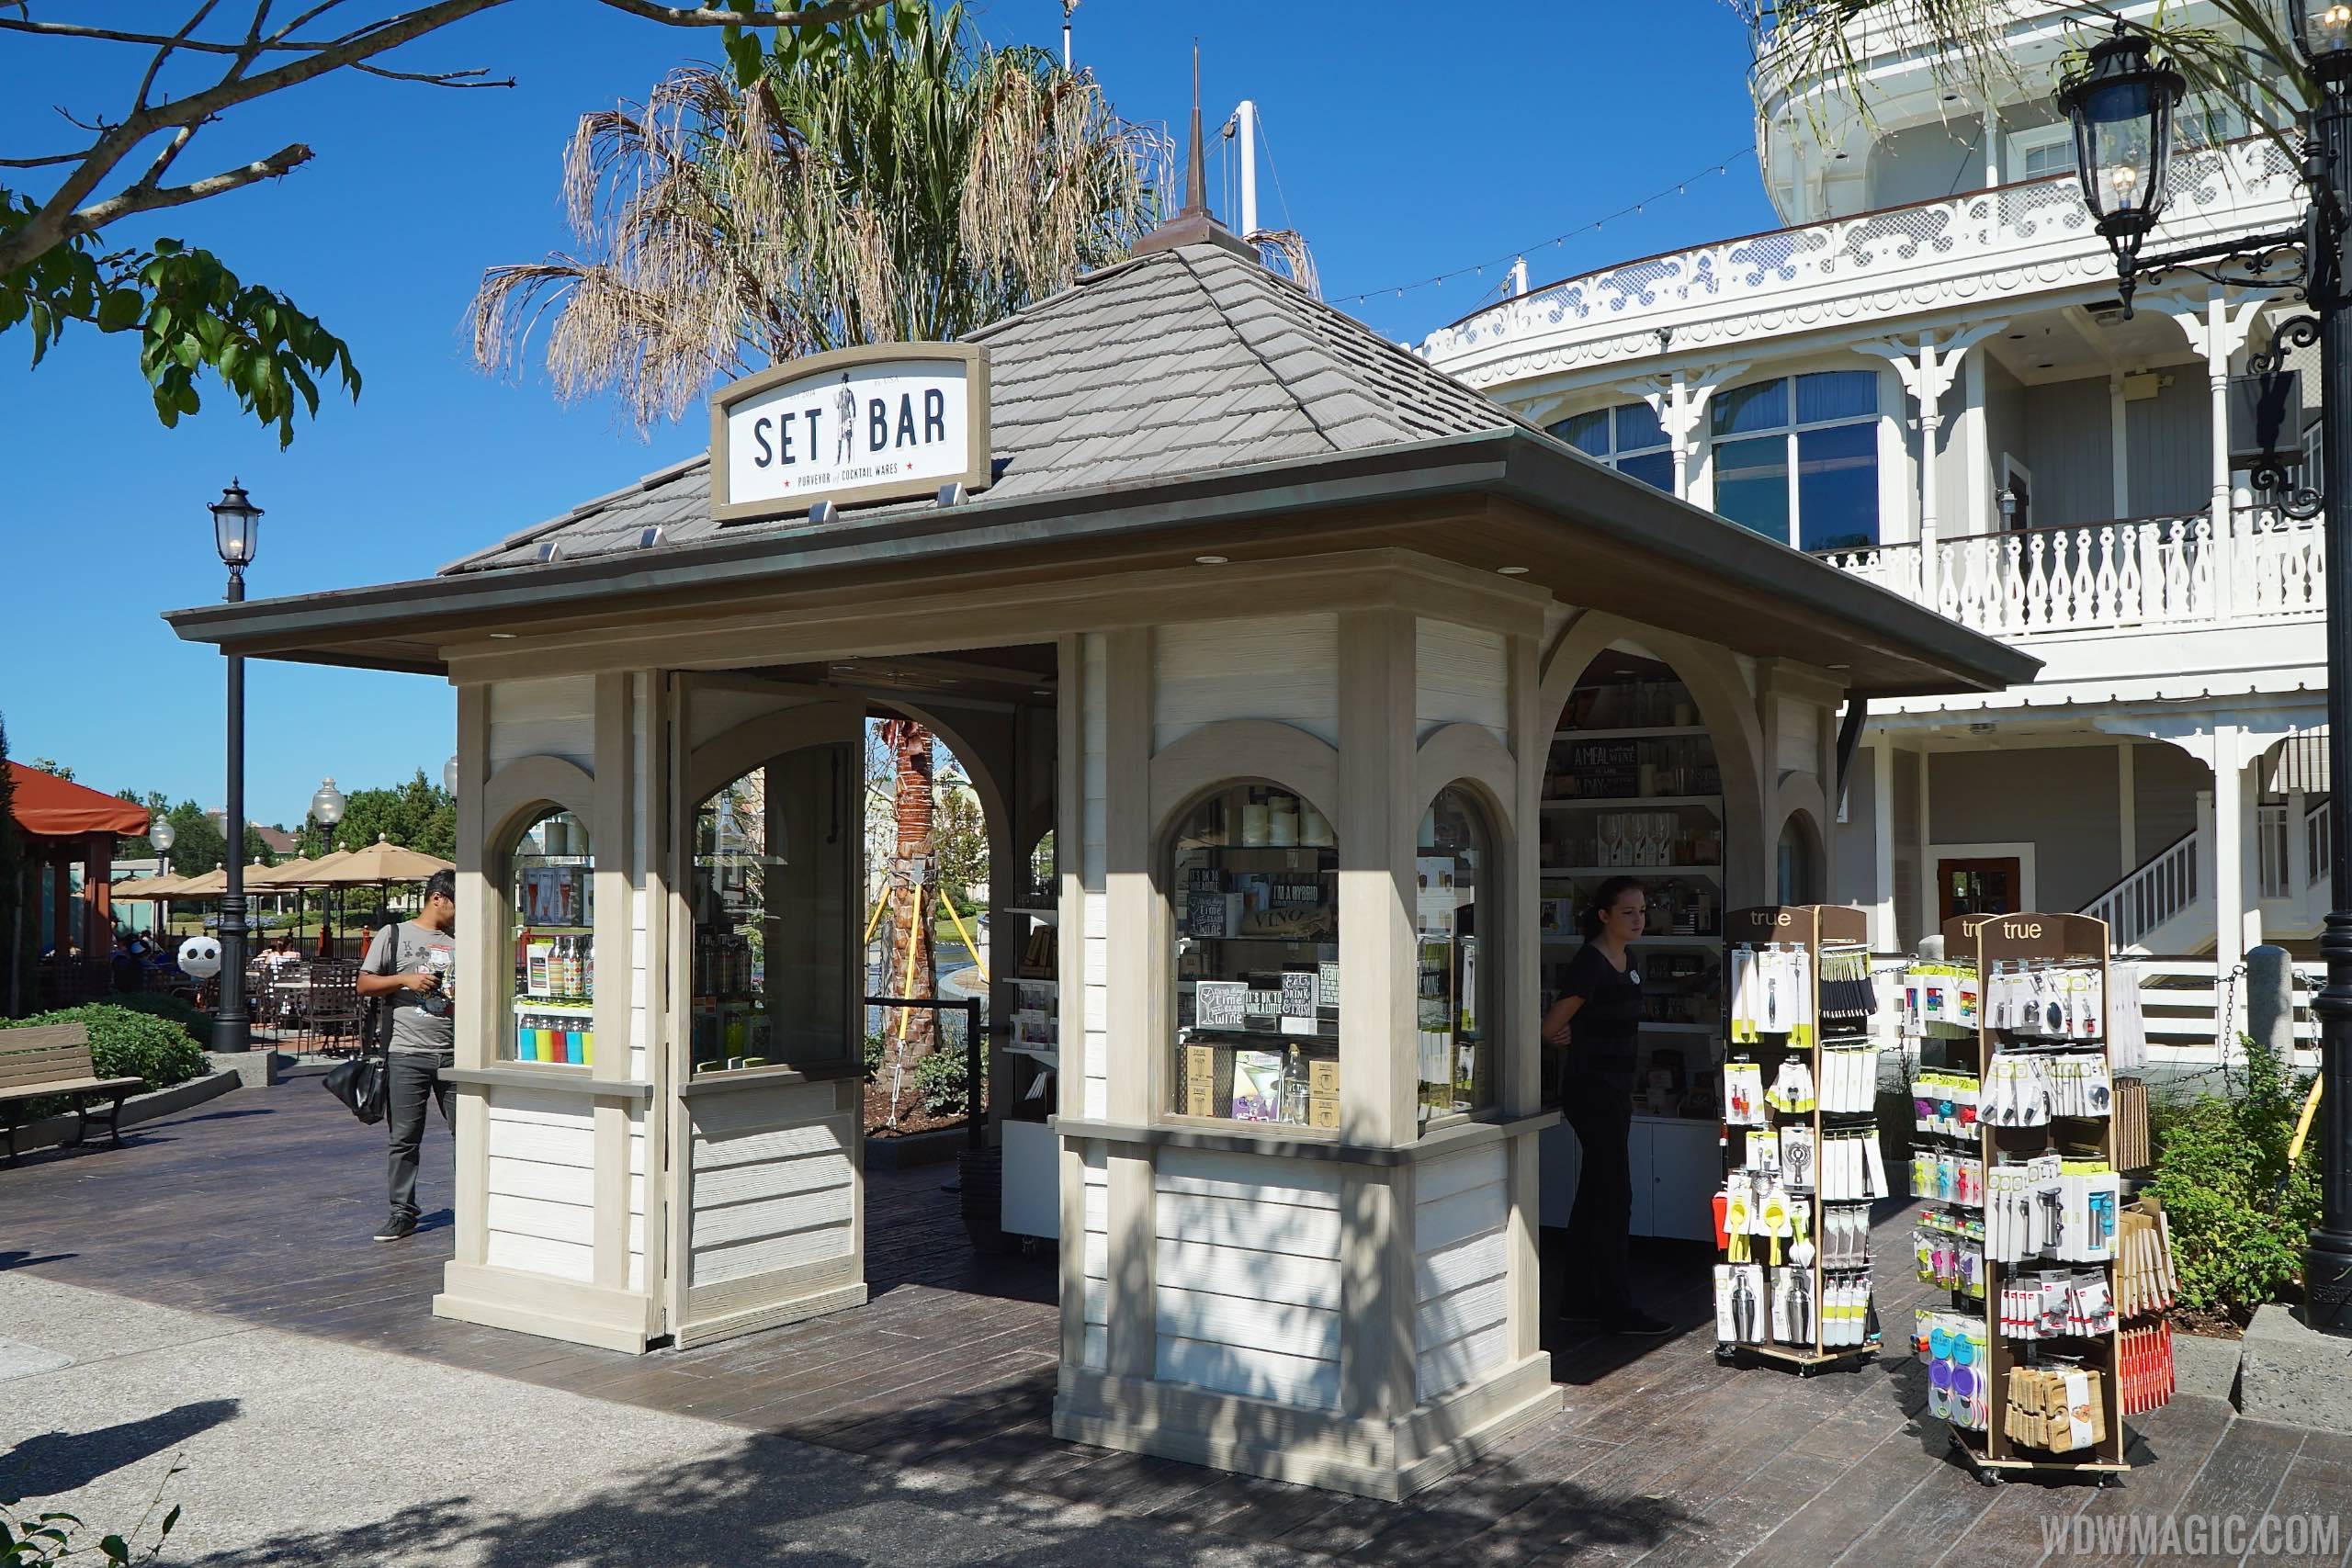 PHOTOS - Two new kiosks open at Downtown Disney as part of Disney Springs redevelopment